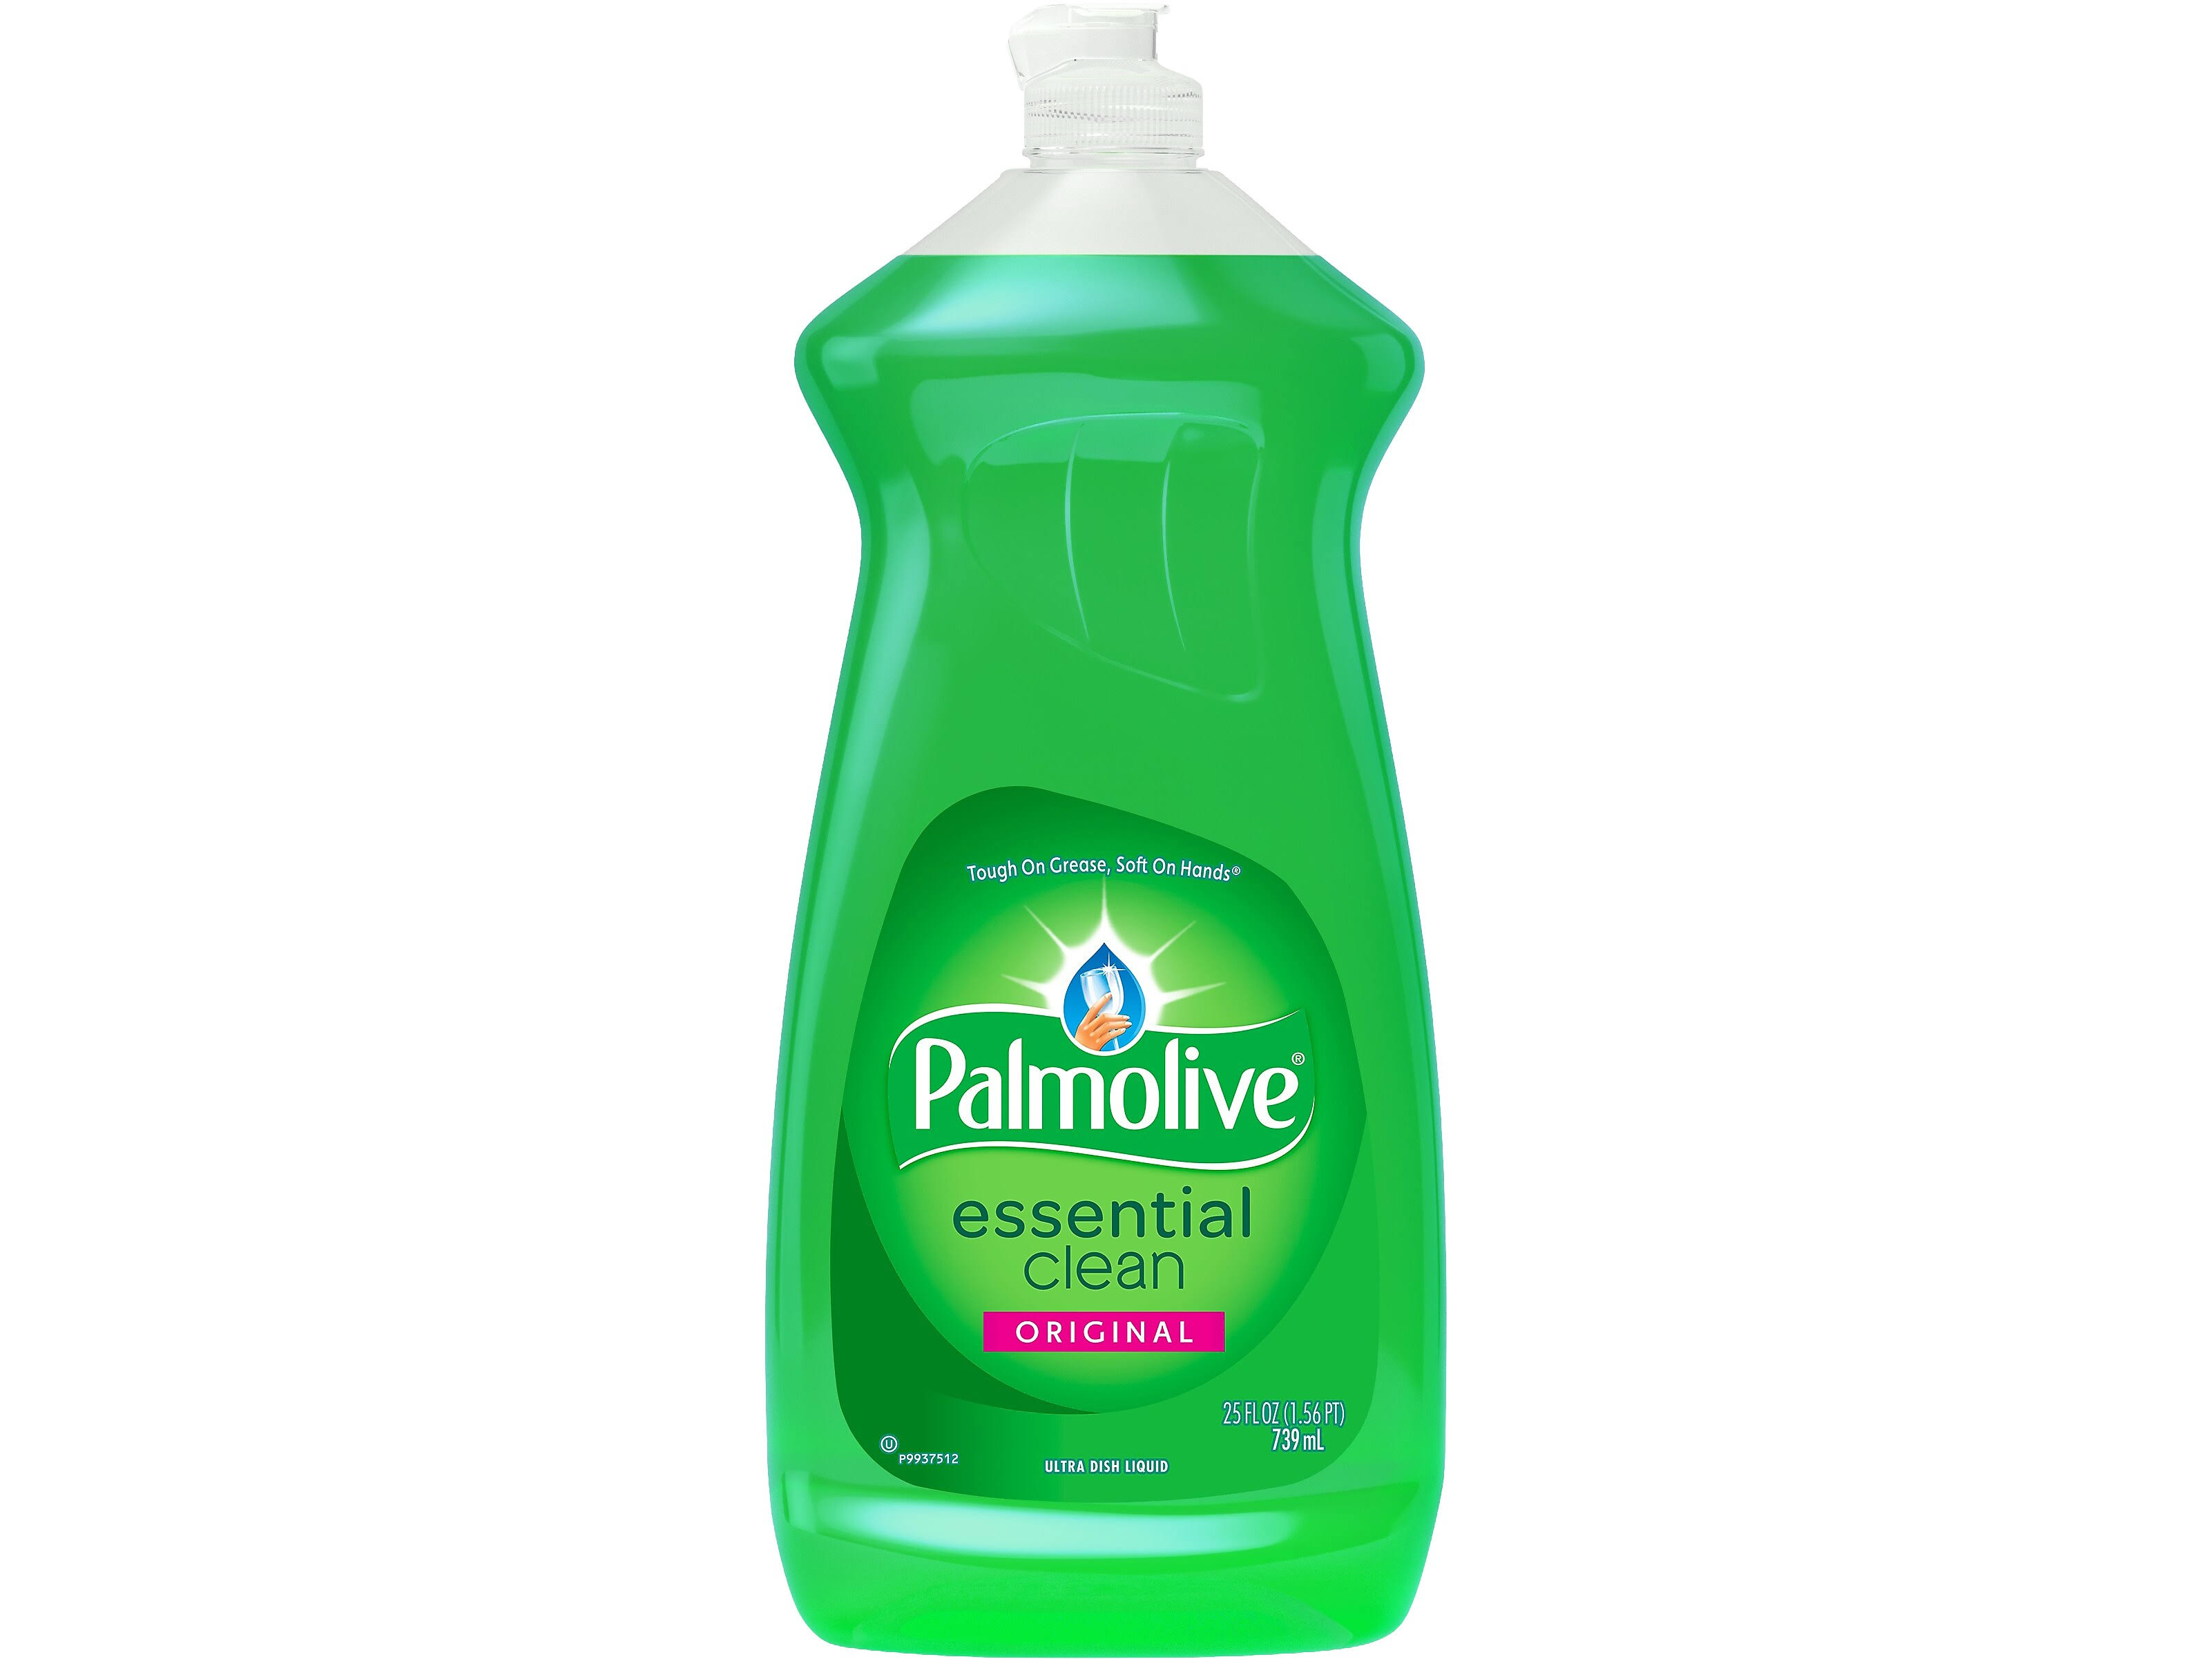 Palmolive Dishwashing Liquid, Fresh Scent, 25 oz US06569A